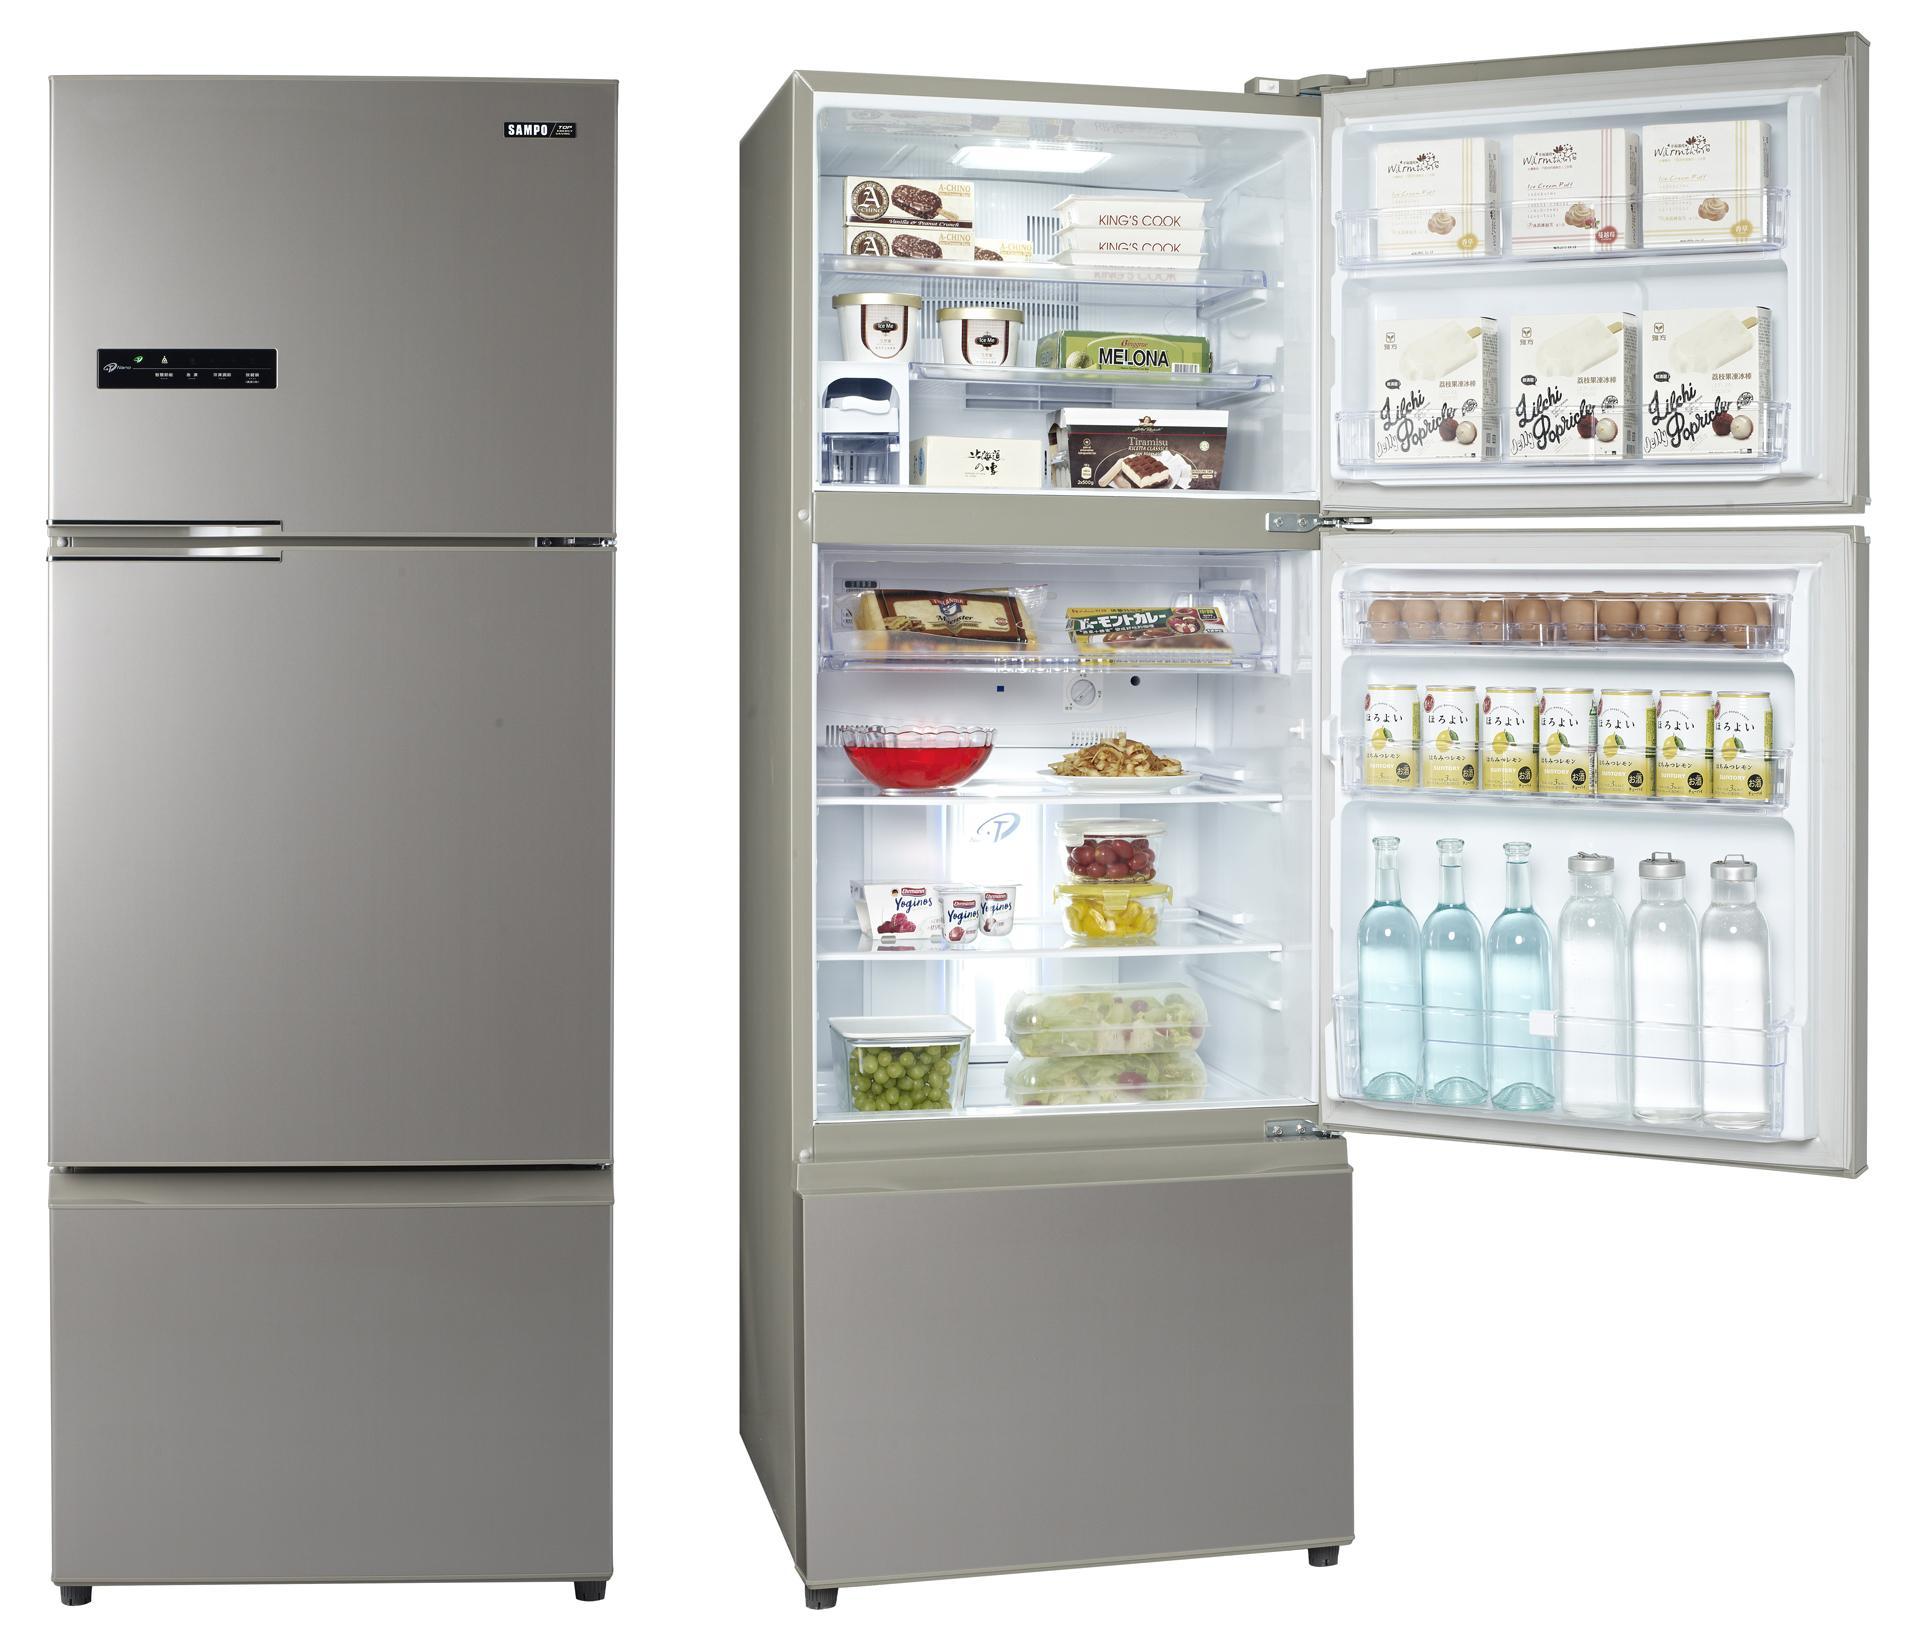 AIE  Smart Inverter refrigerator series